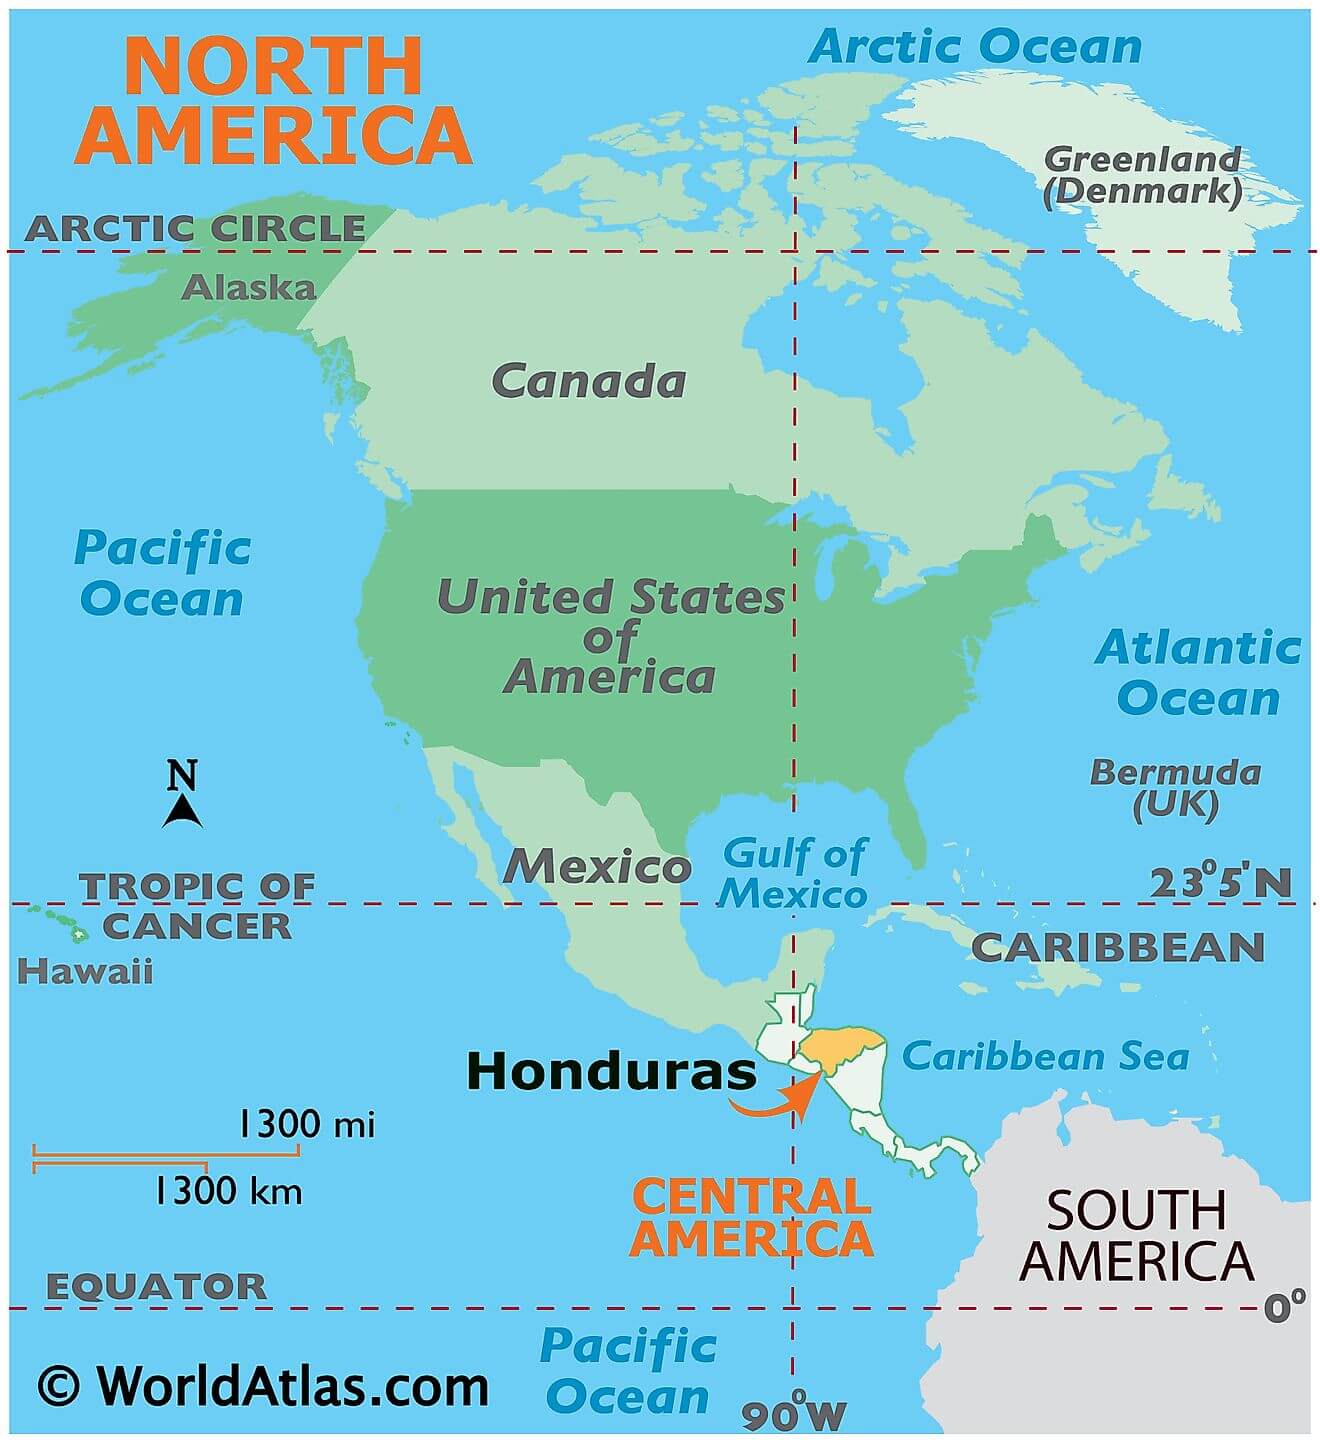 Honduras ở đâu?